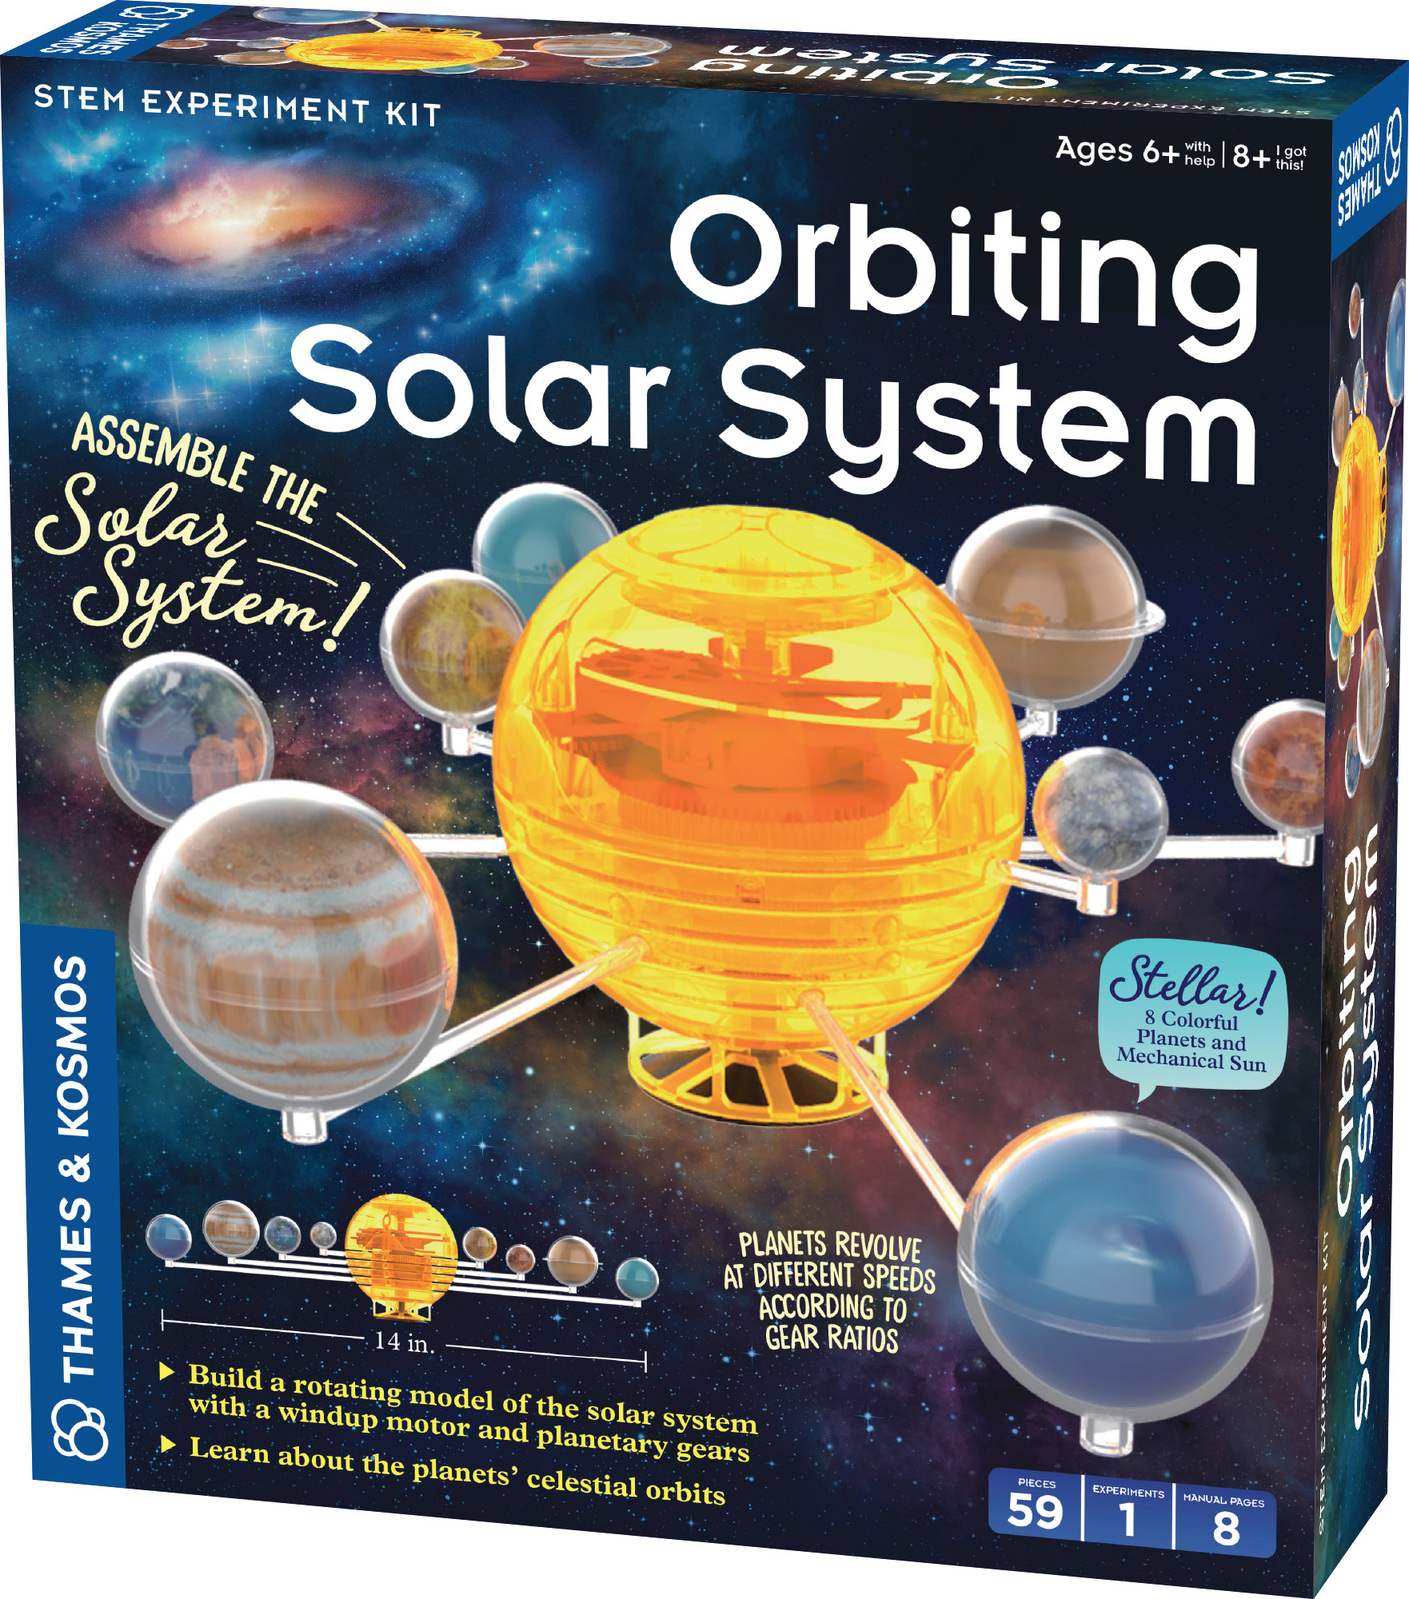 Orbiting Solar System image